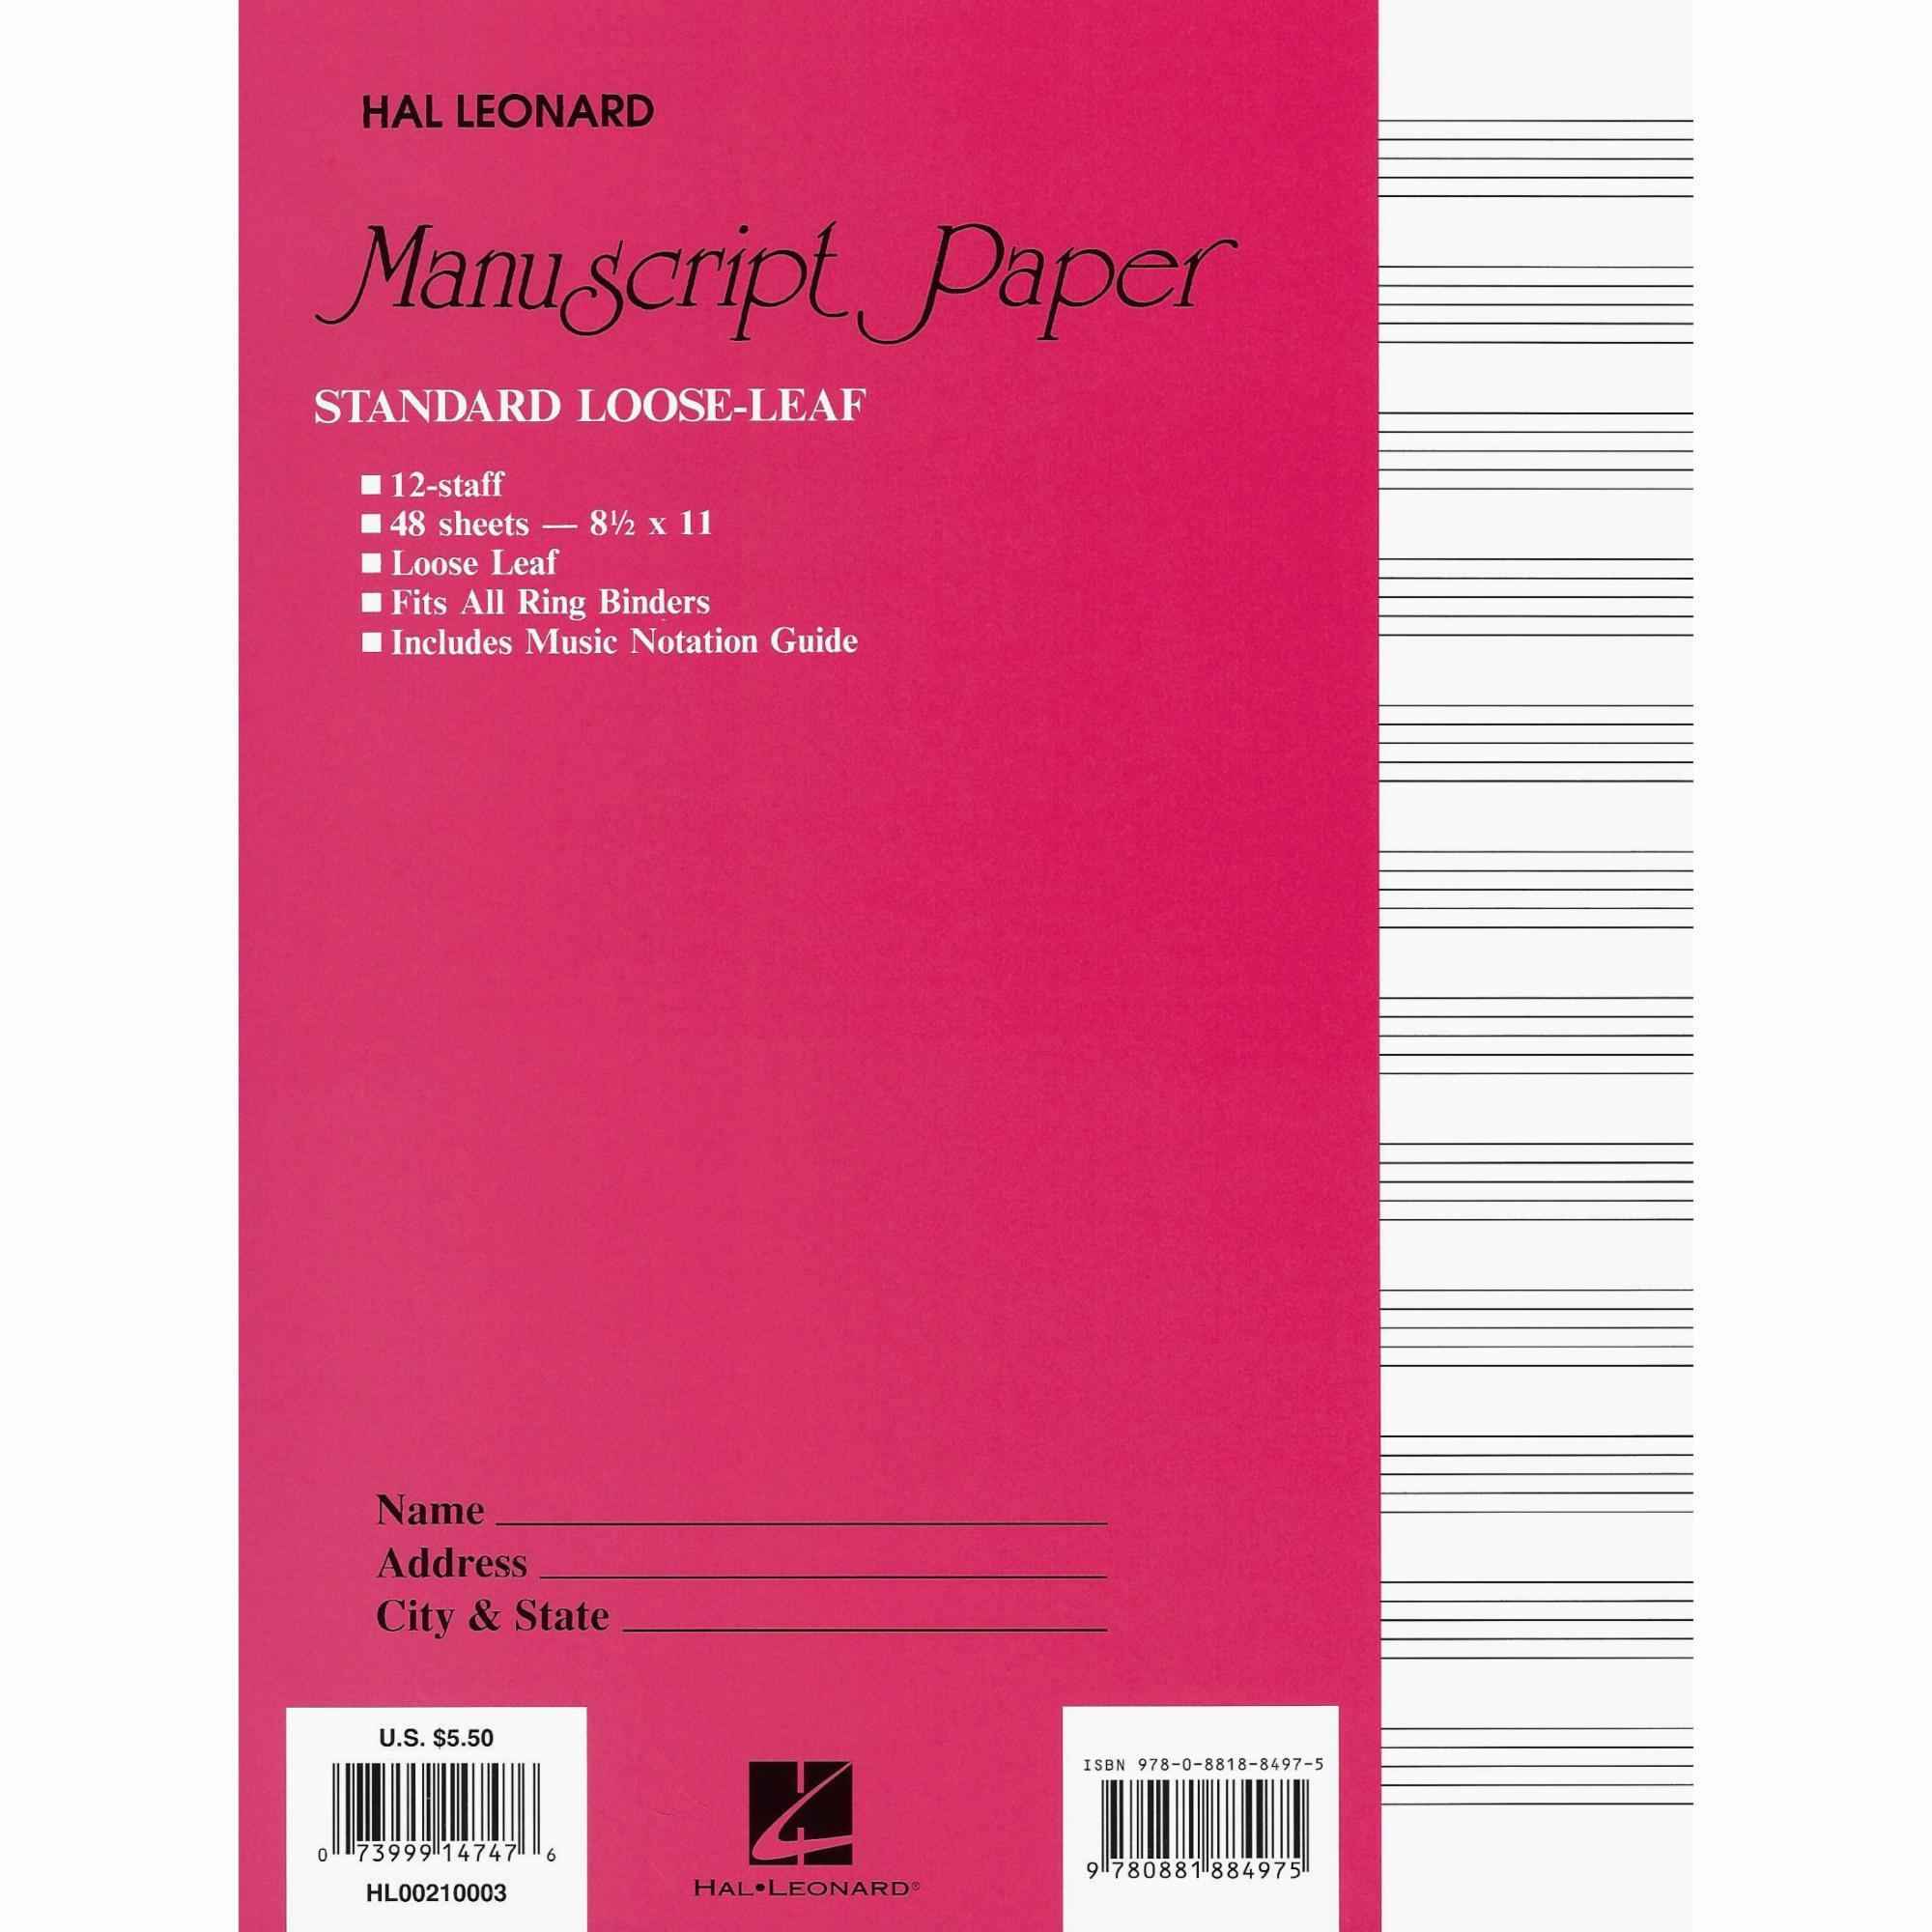 Standard Loose-Leaf Manuscript Paper